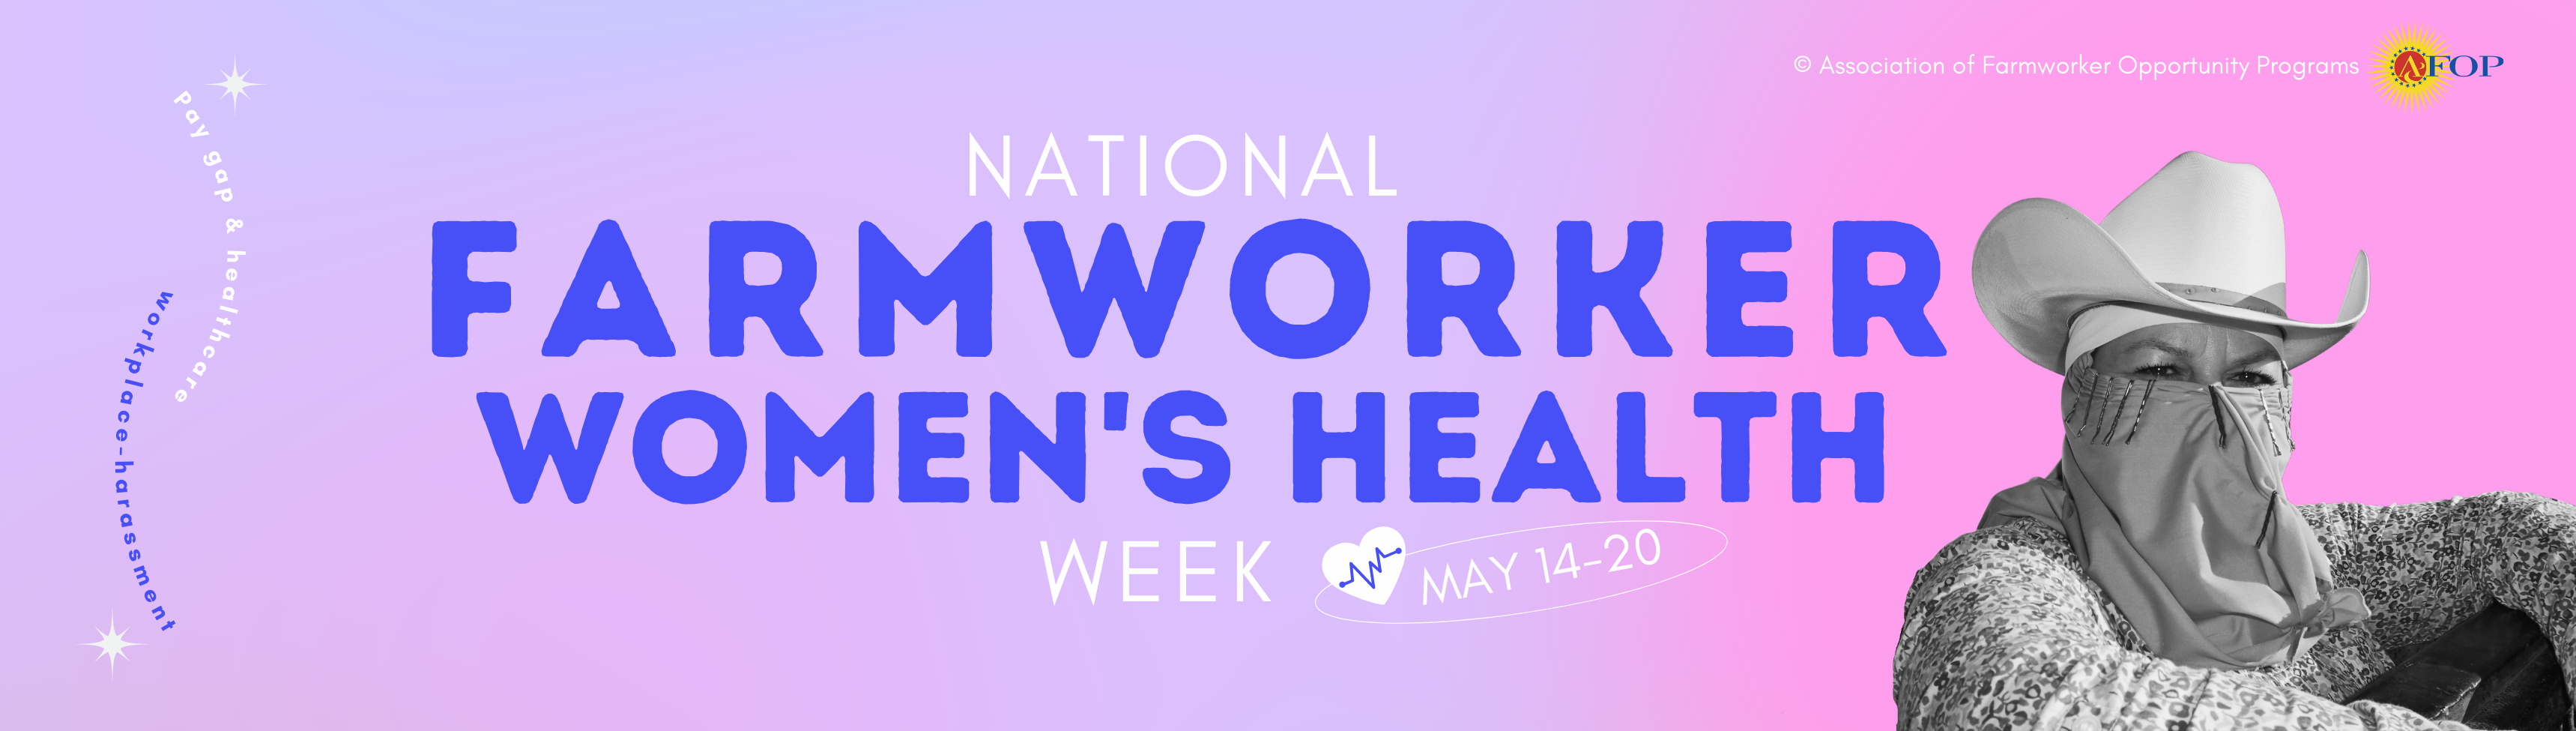 National Farmworker Women's Health Week May 14-20. Pay gap & healthcare; workplace harassment. Association of Farmworker Opportunity Programs: FOP.